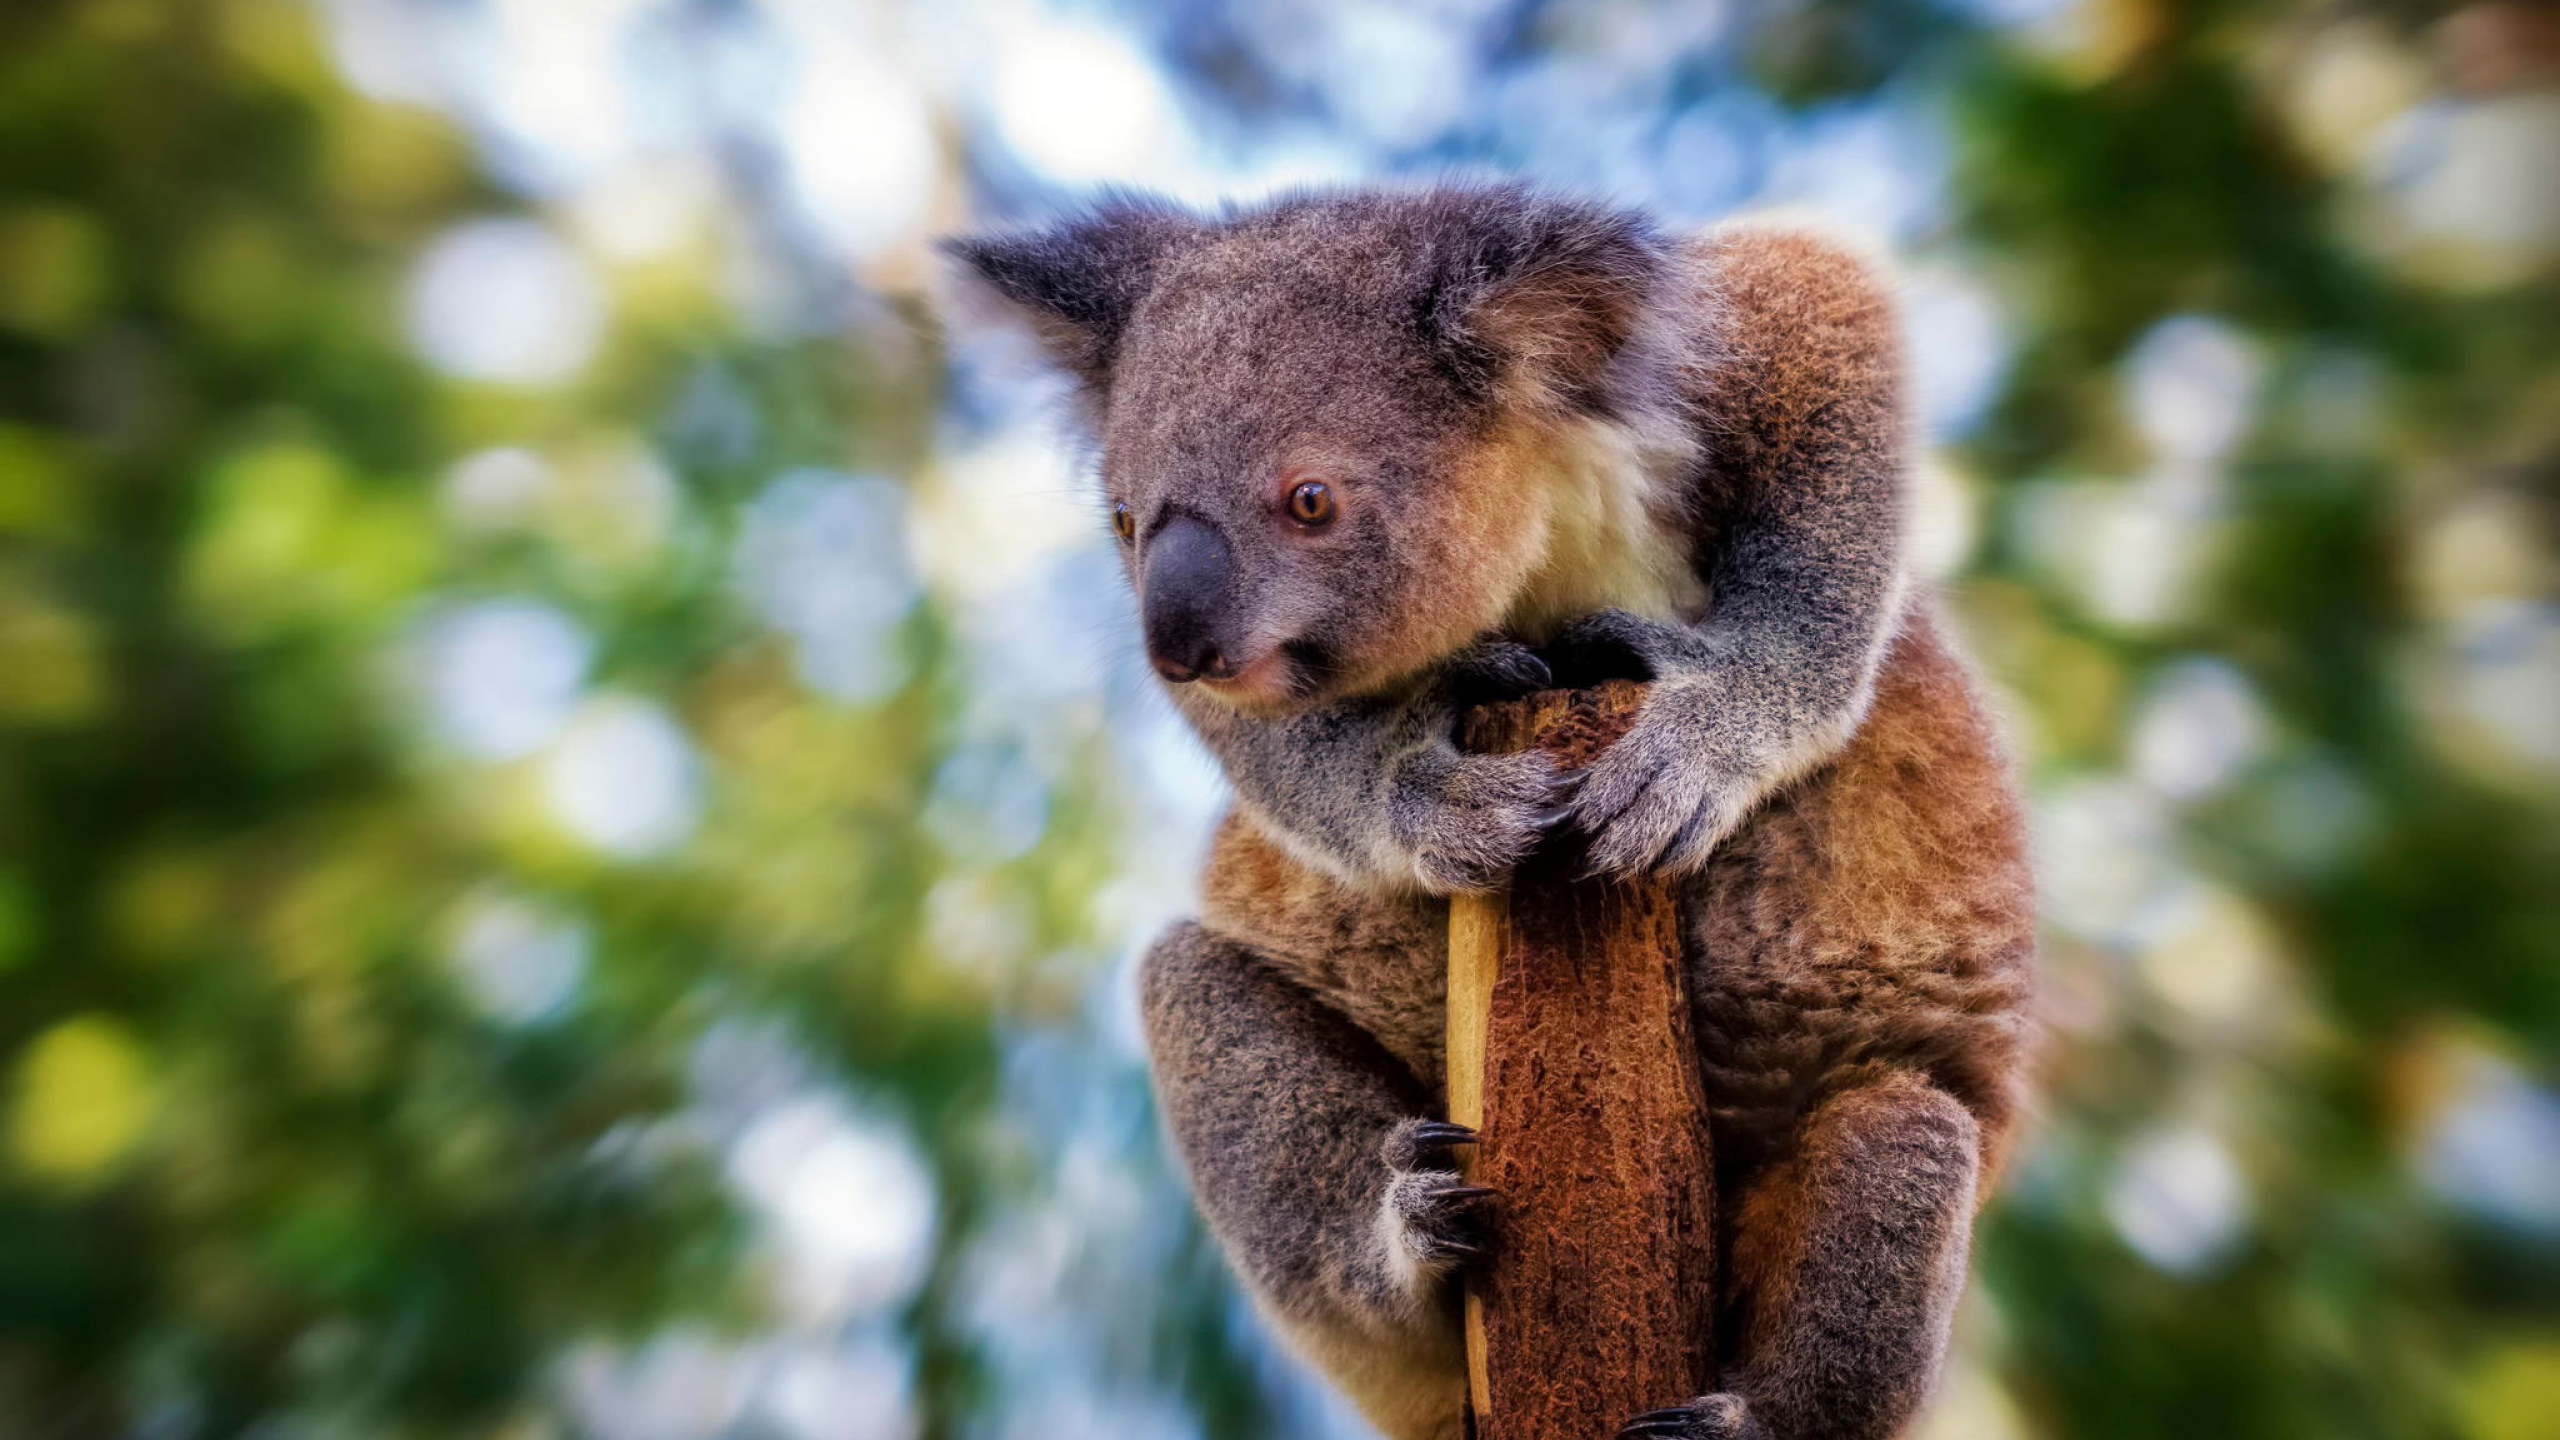 2560x1440 Koala Blur Beast 1440p Resolution Wallpaper Hd Animals 4k Wallpapers Images Photos And Background Wallpapers Den